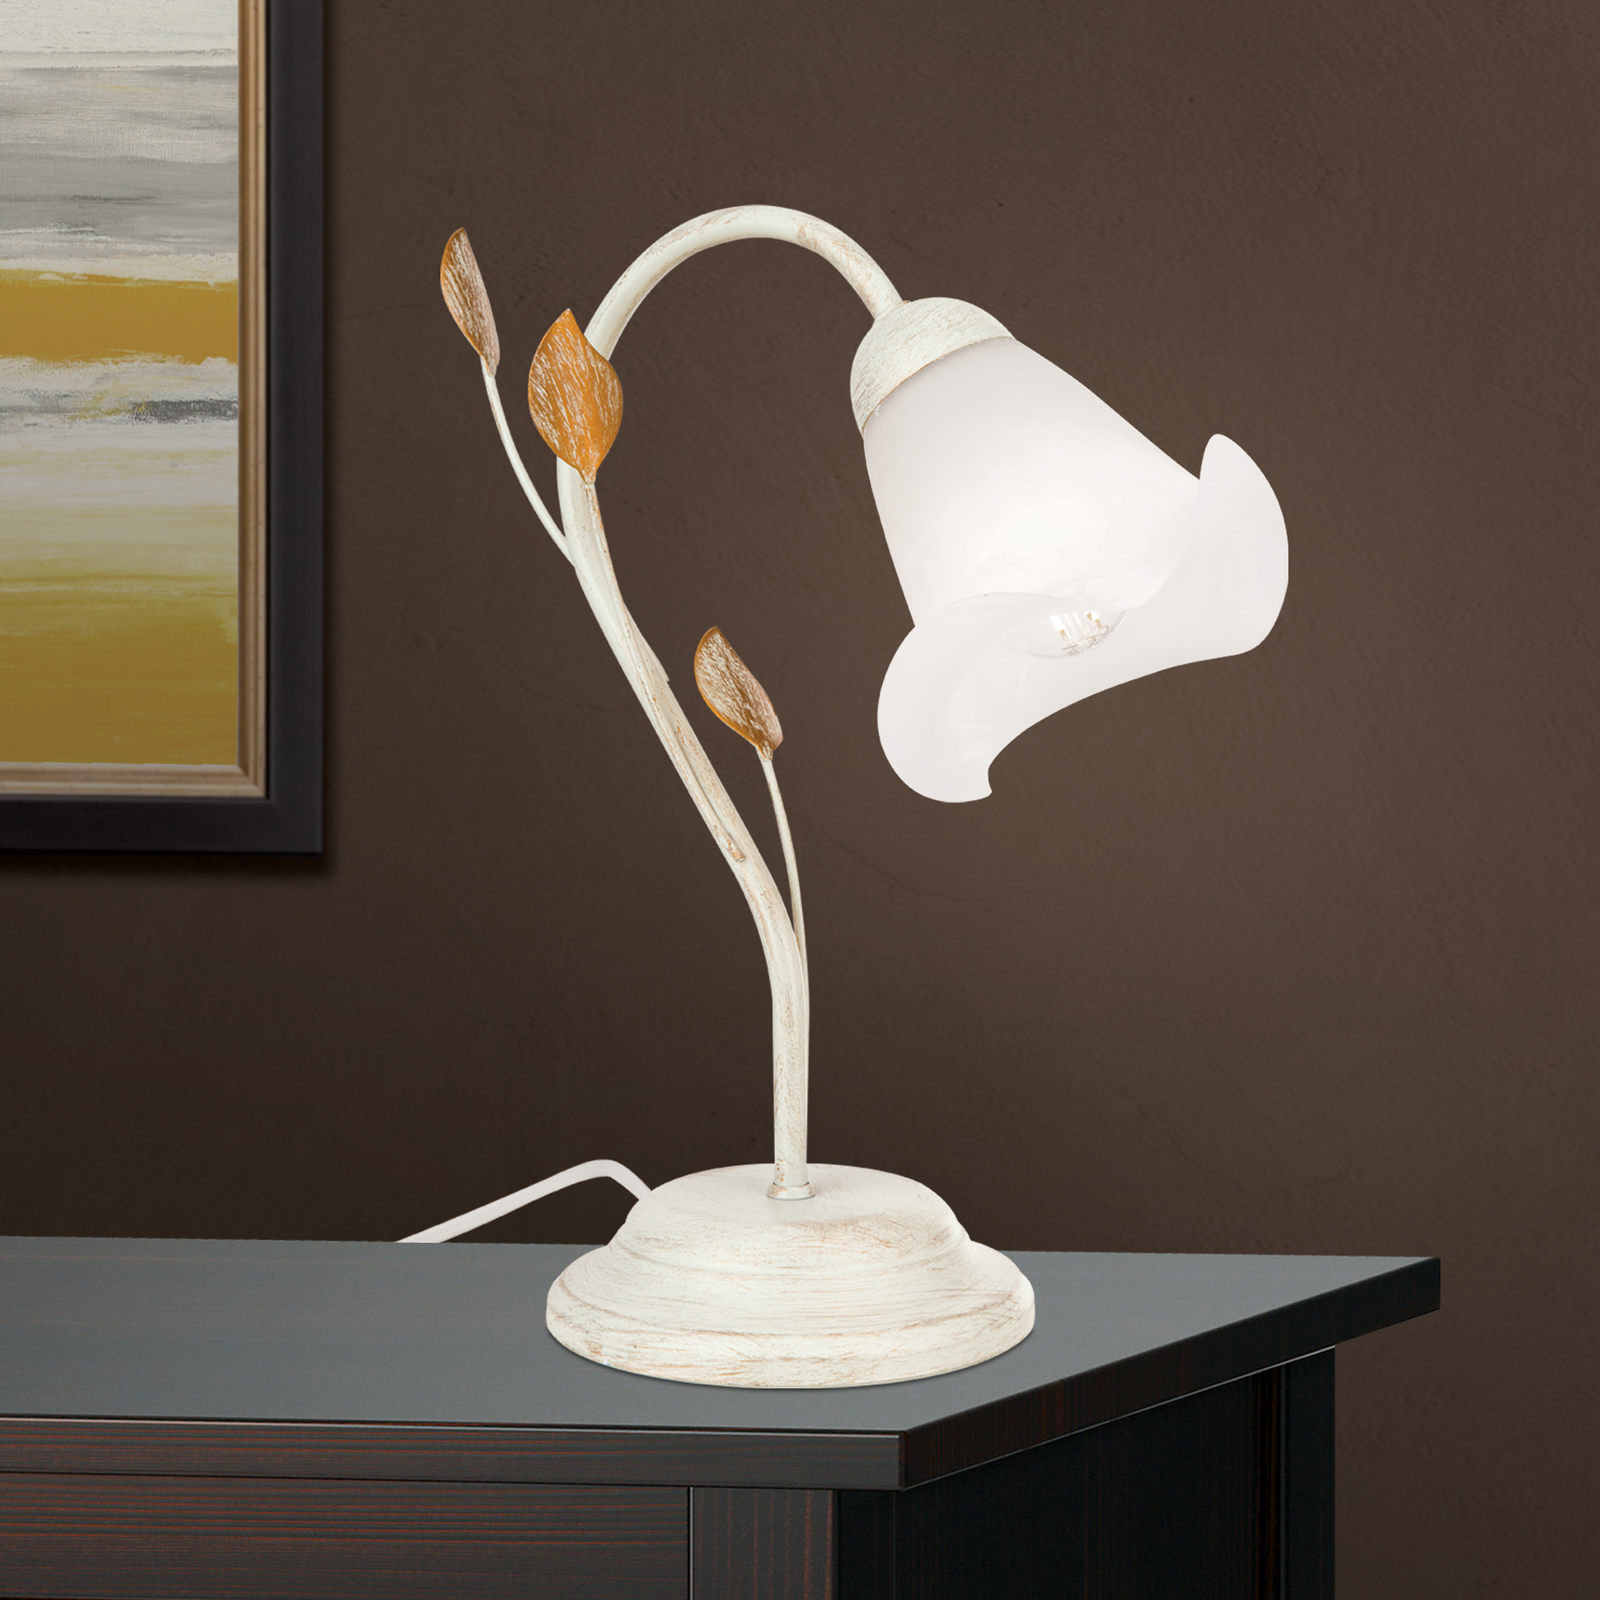 Lampa Sisi florentský štýl, slonovinovo-zlatá